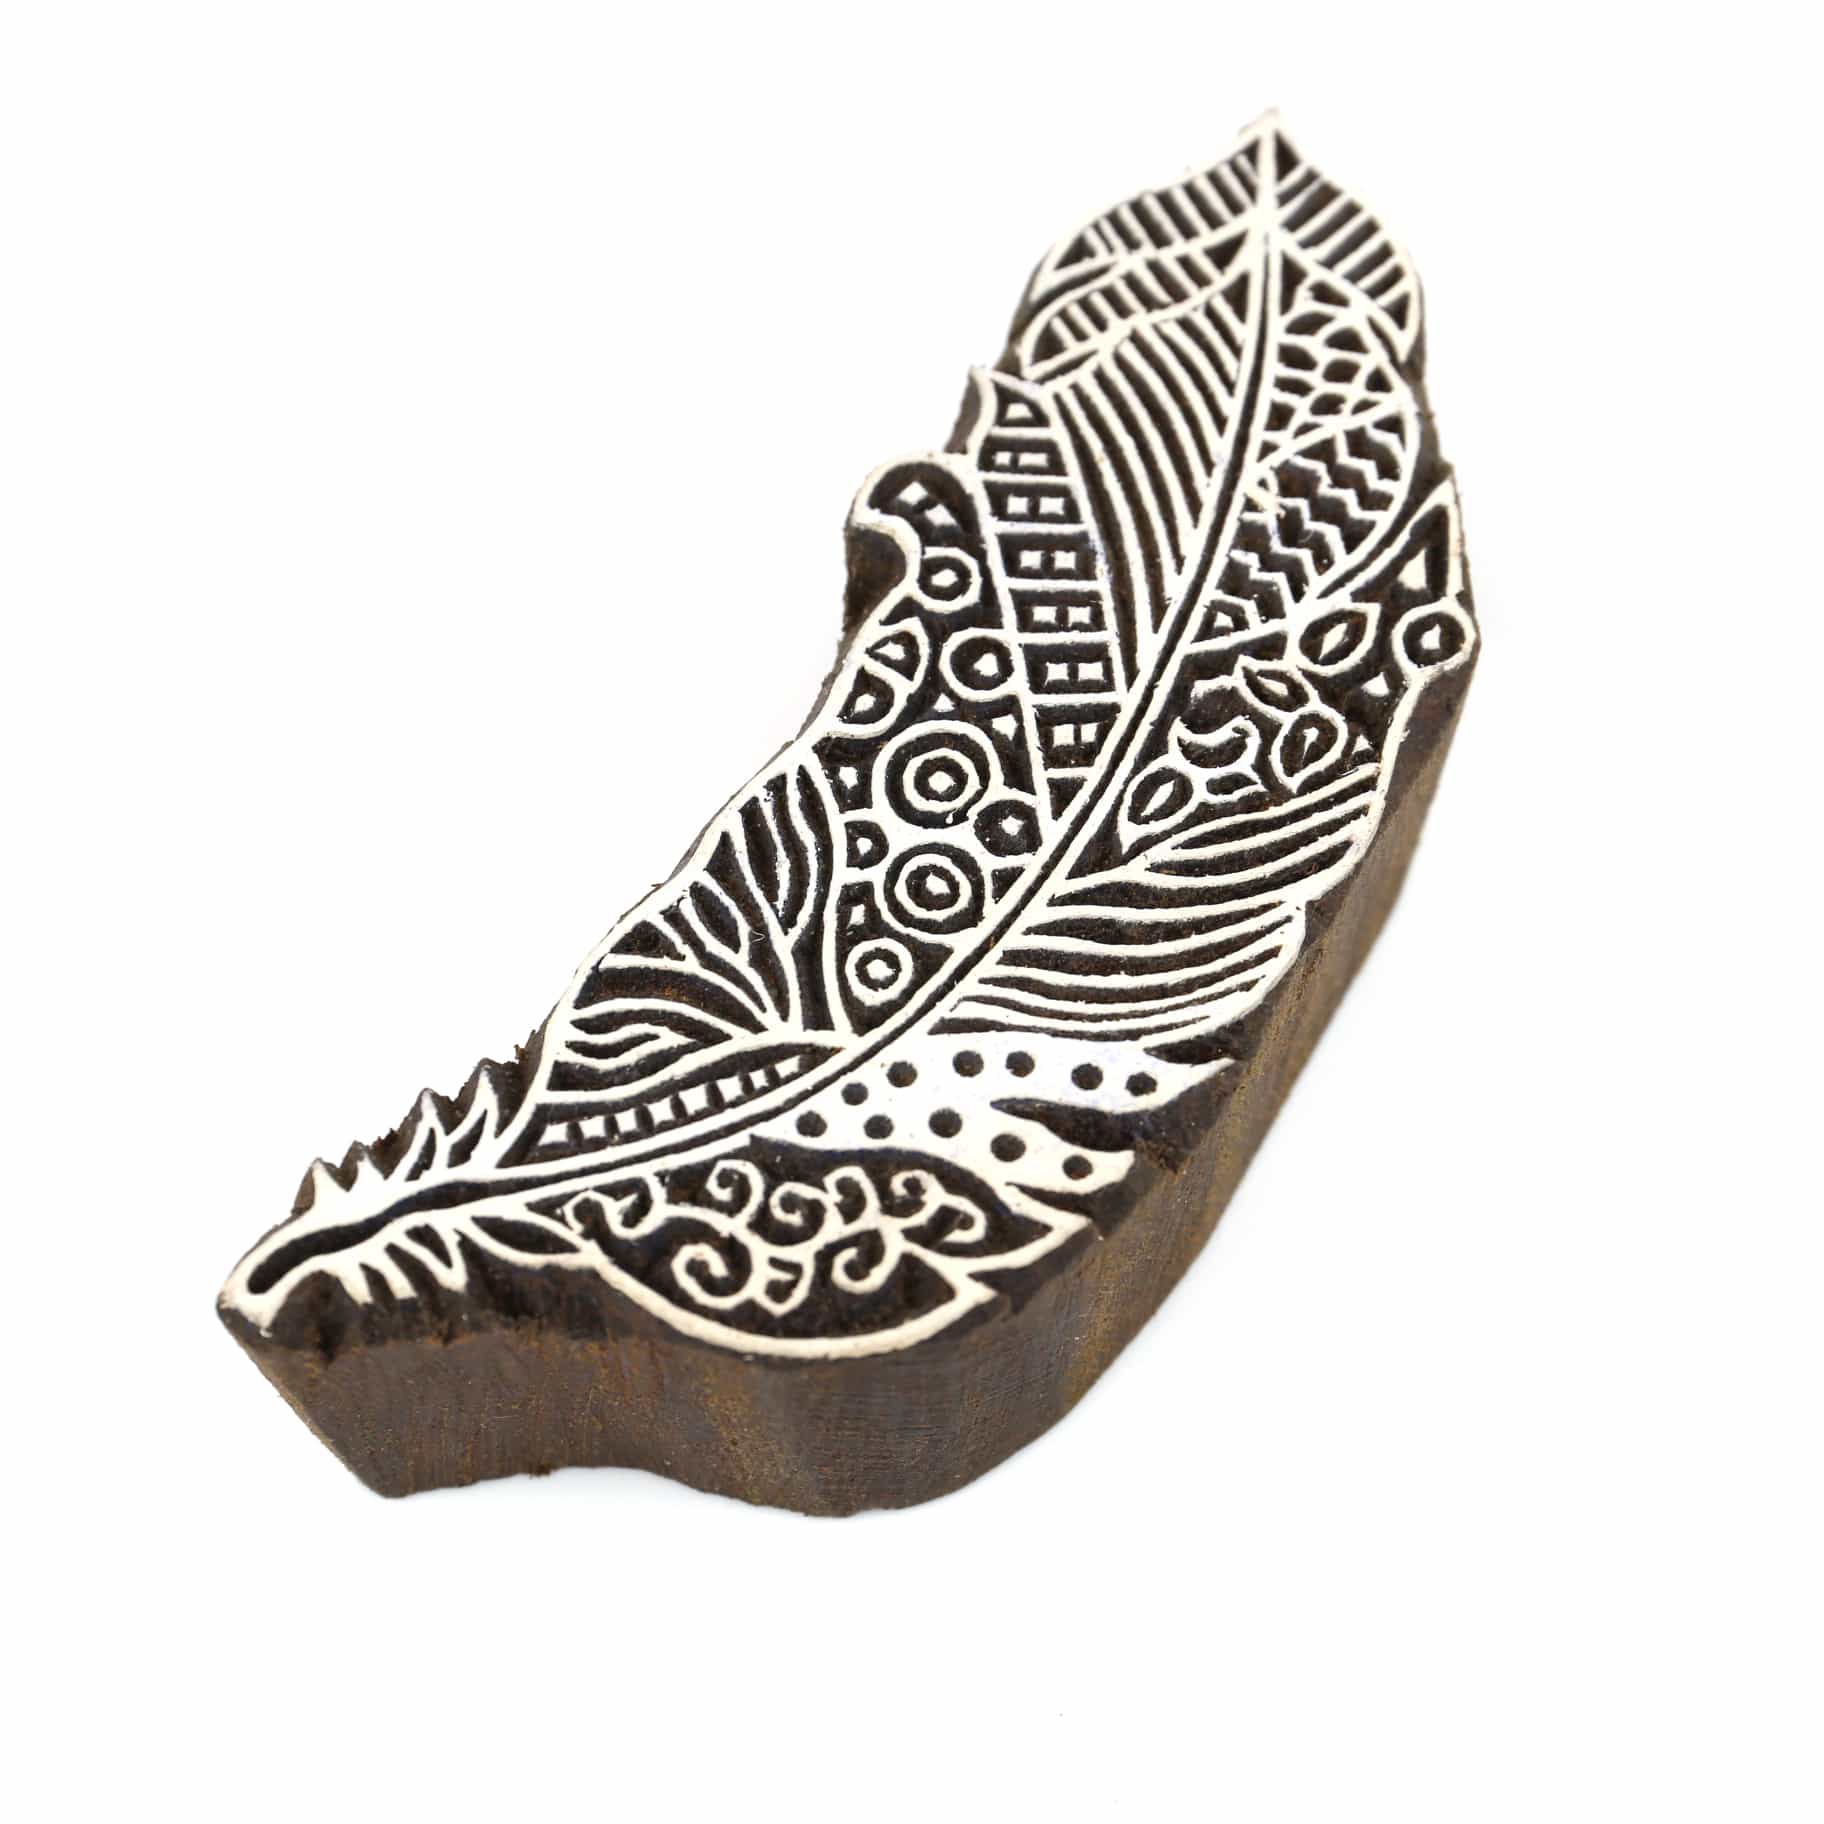 Stempel - Original Textilstempel - Indischer Holzstempel - Stoffdruck -  Feder - Ornament - Mittel